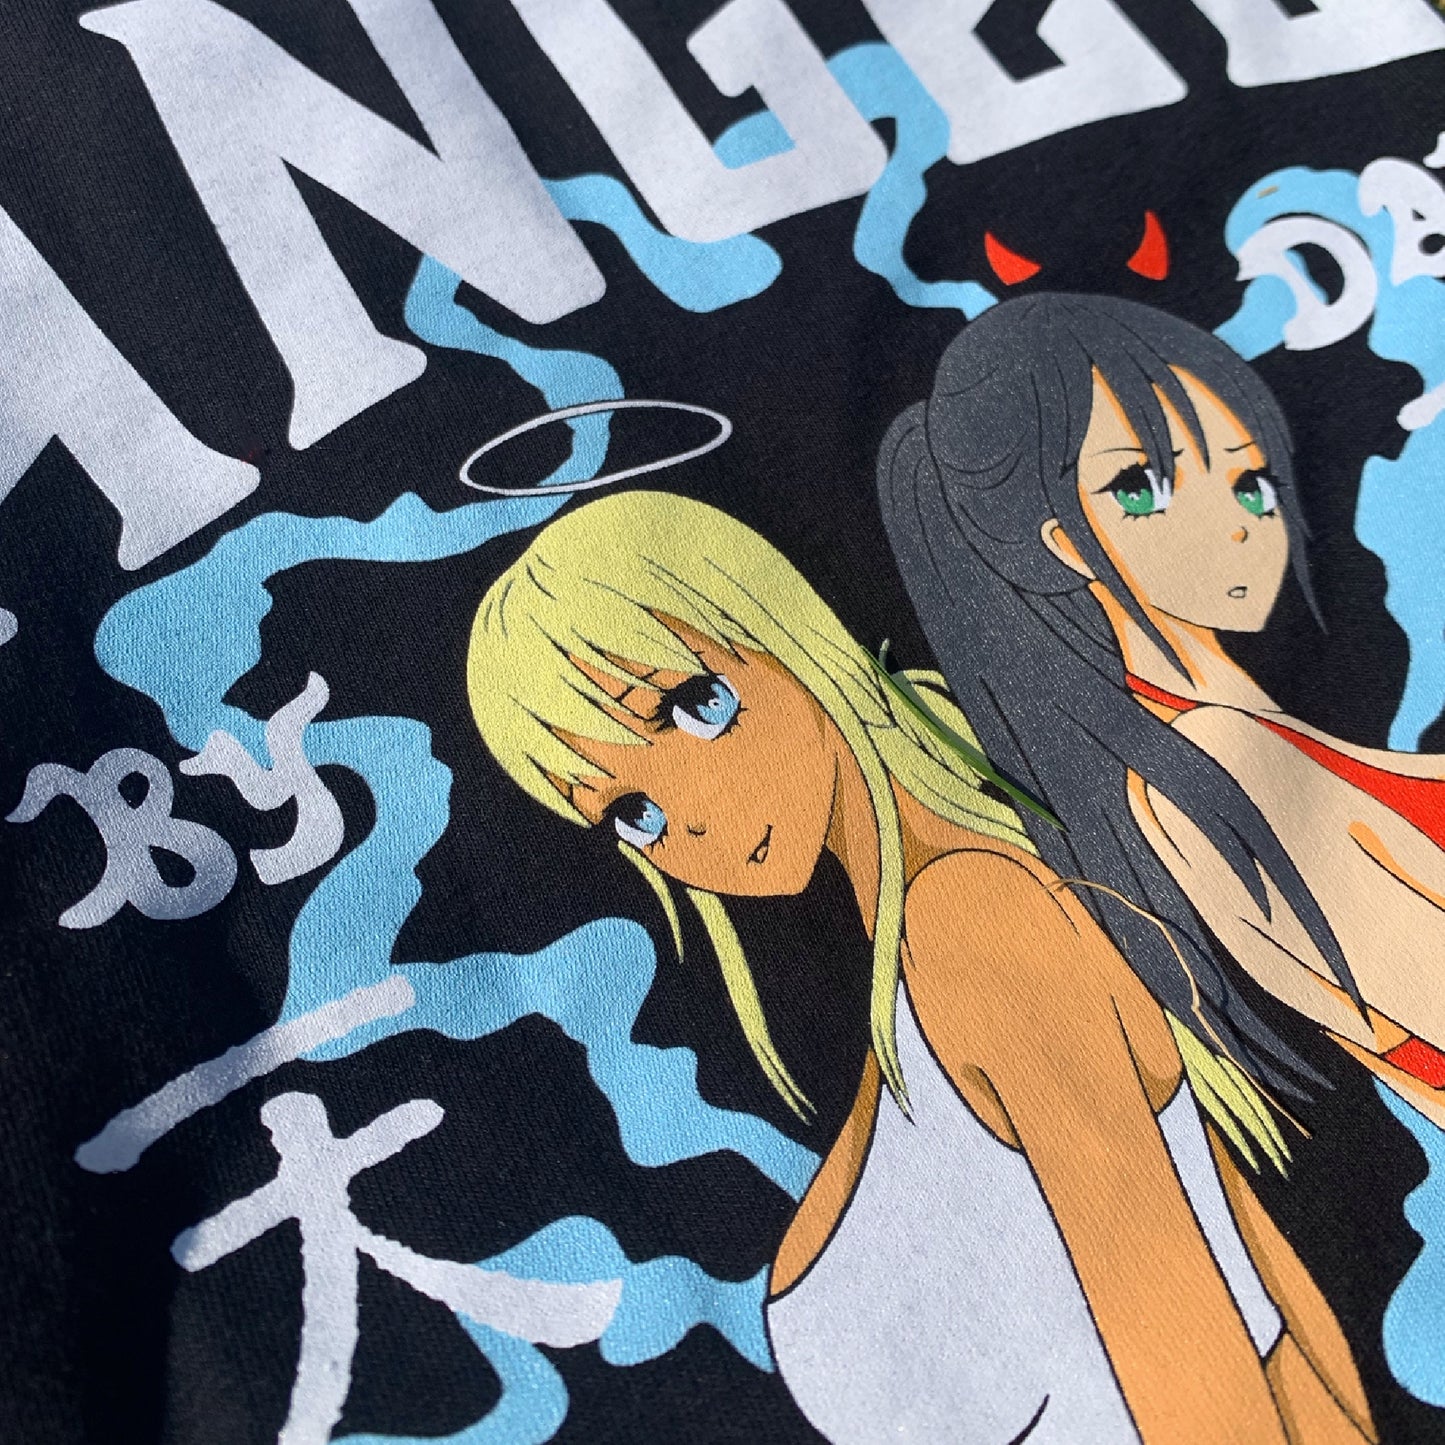 Angel & Devil Tee Shirt